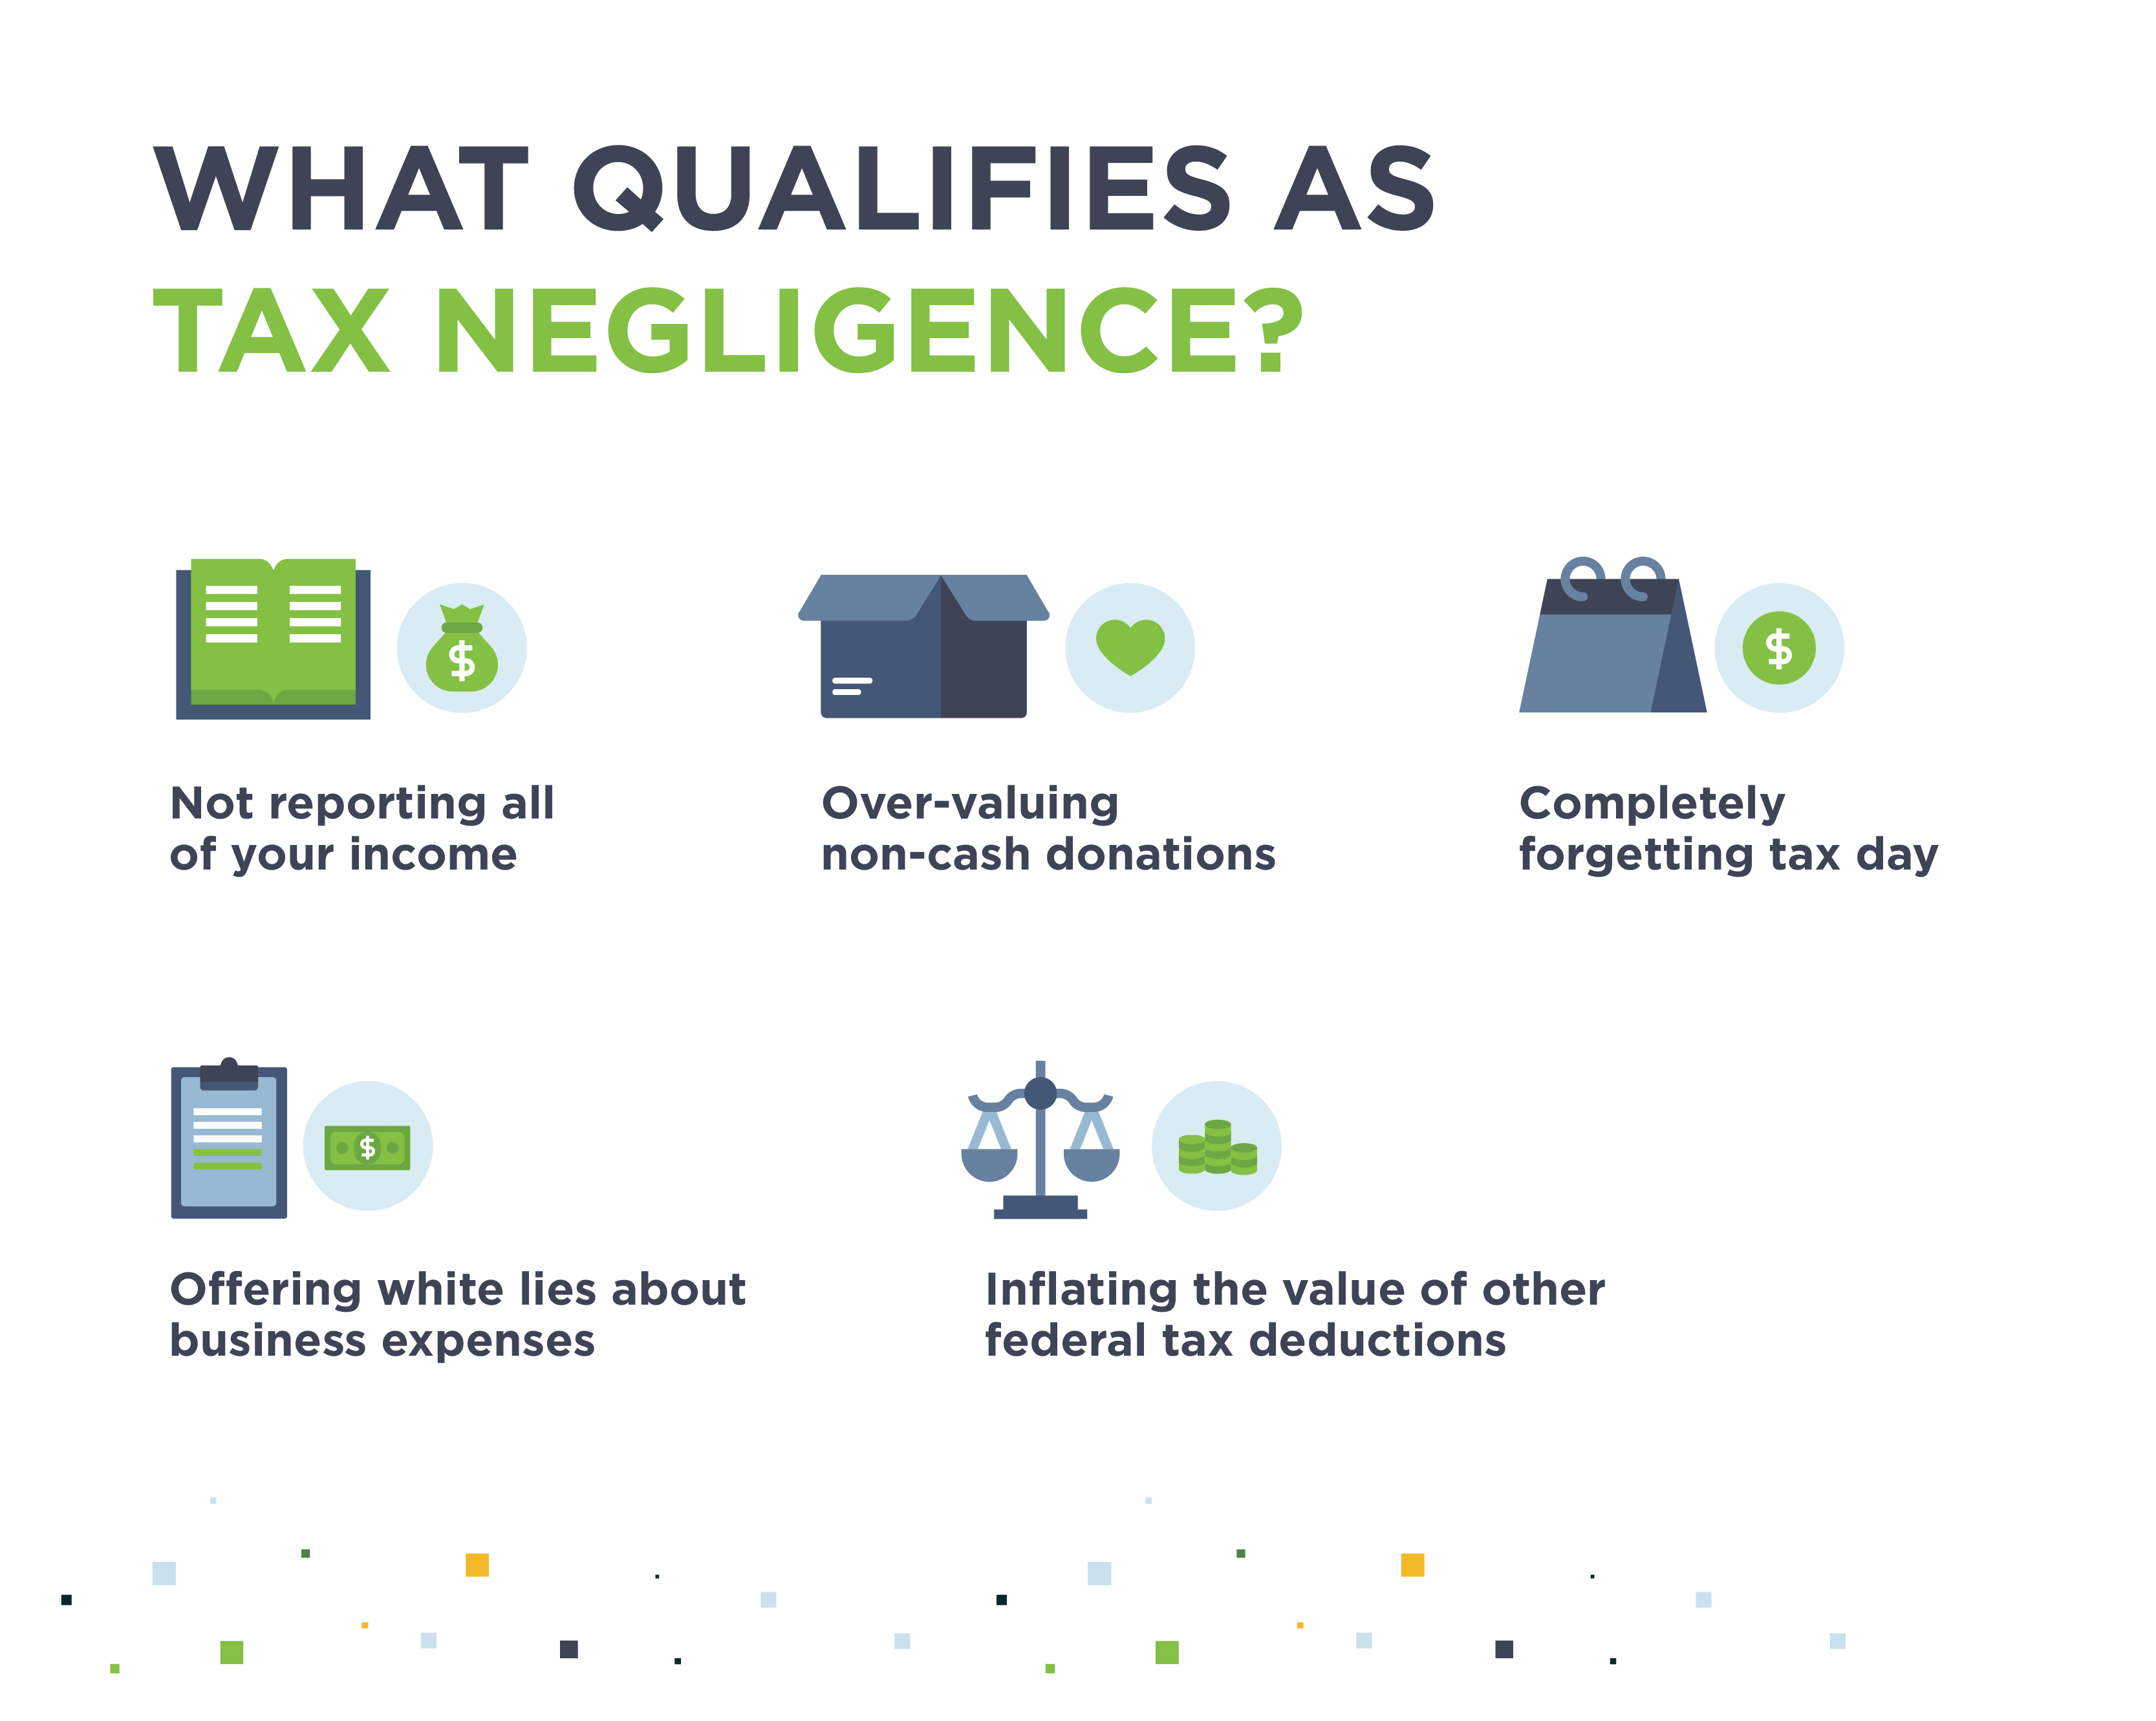 List of things that qualify as tax negligence.